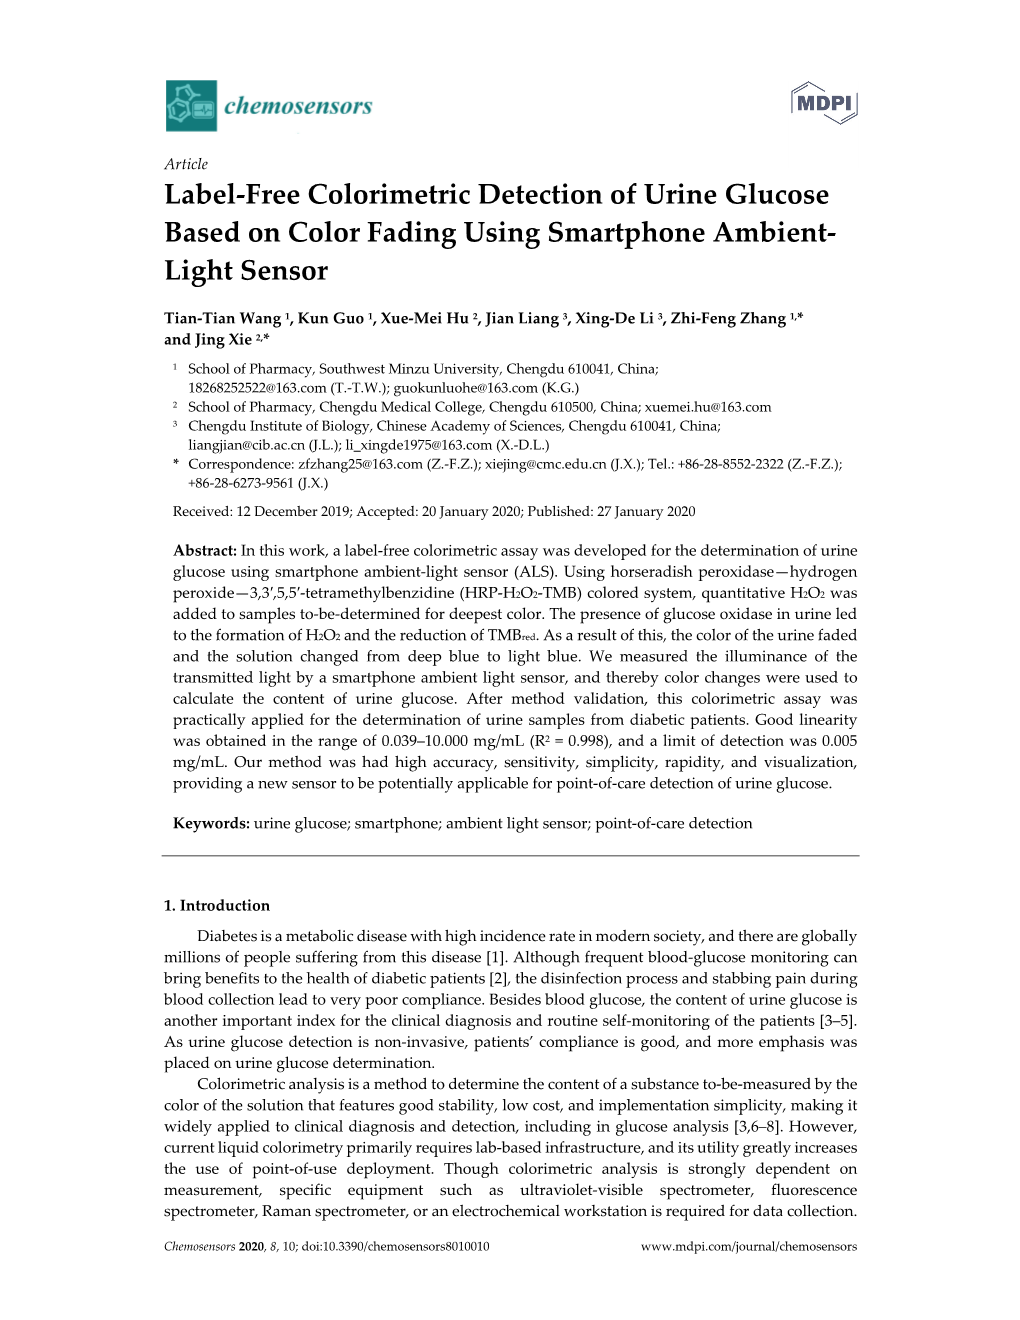 Label-Free Colorimetric Detection of Urine Glucose Based on Color Fading Using Smartphone Ambient- Light Sensor